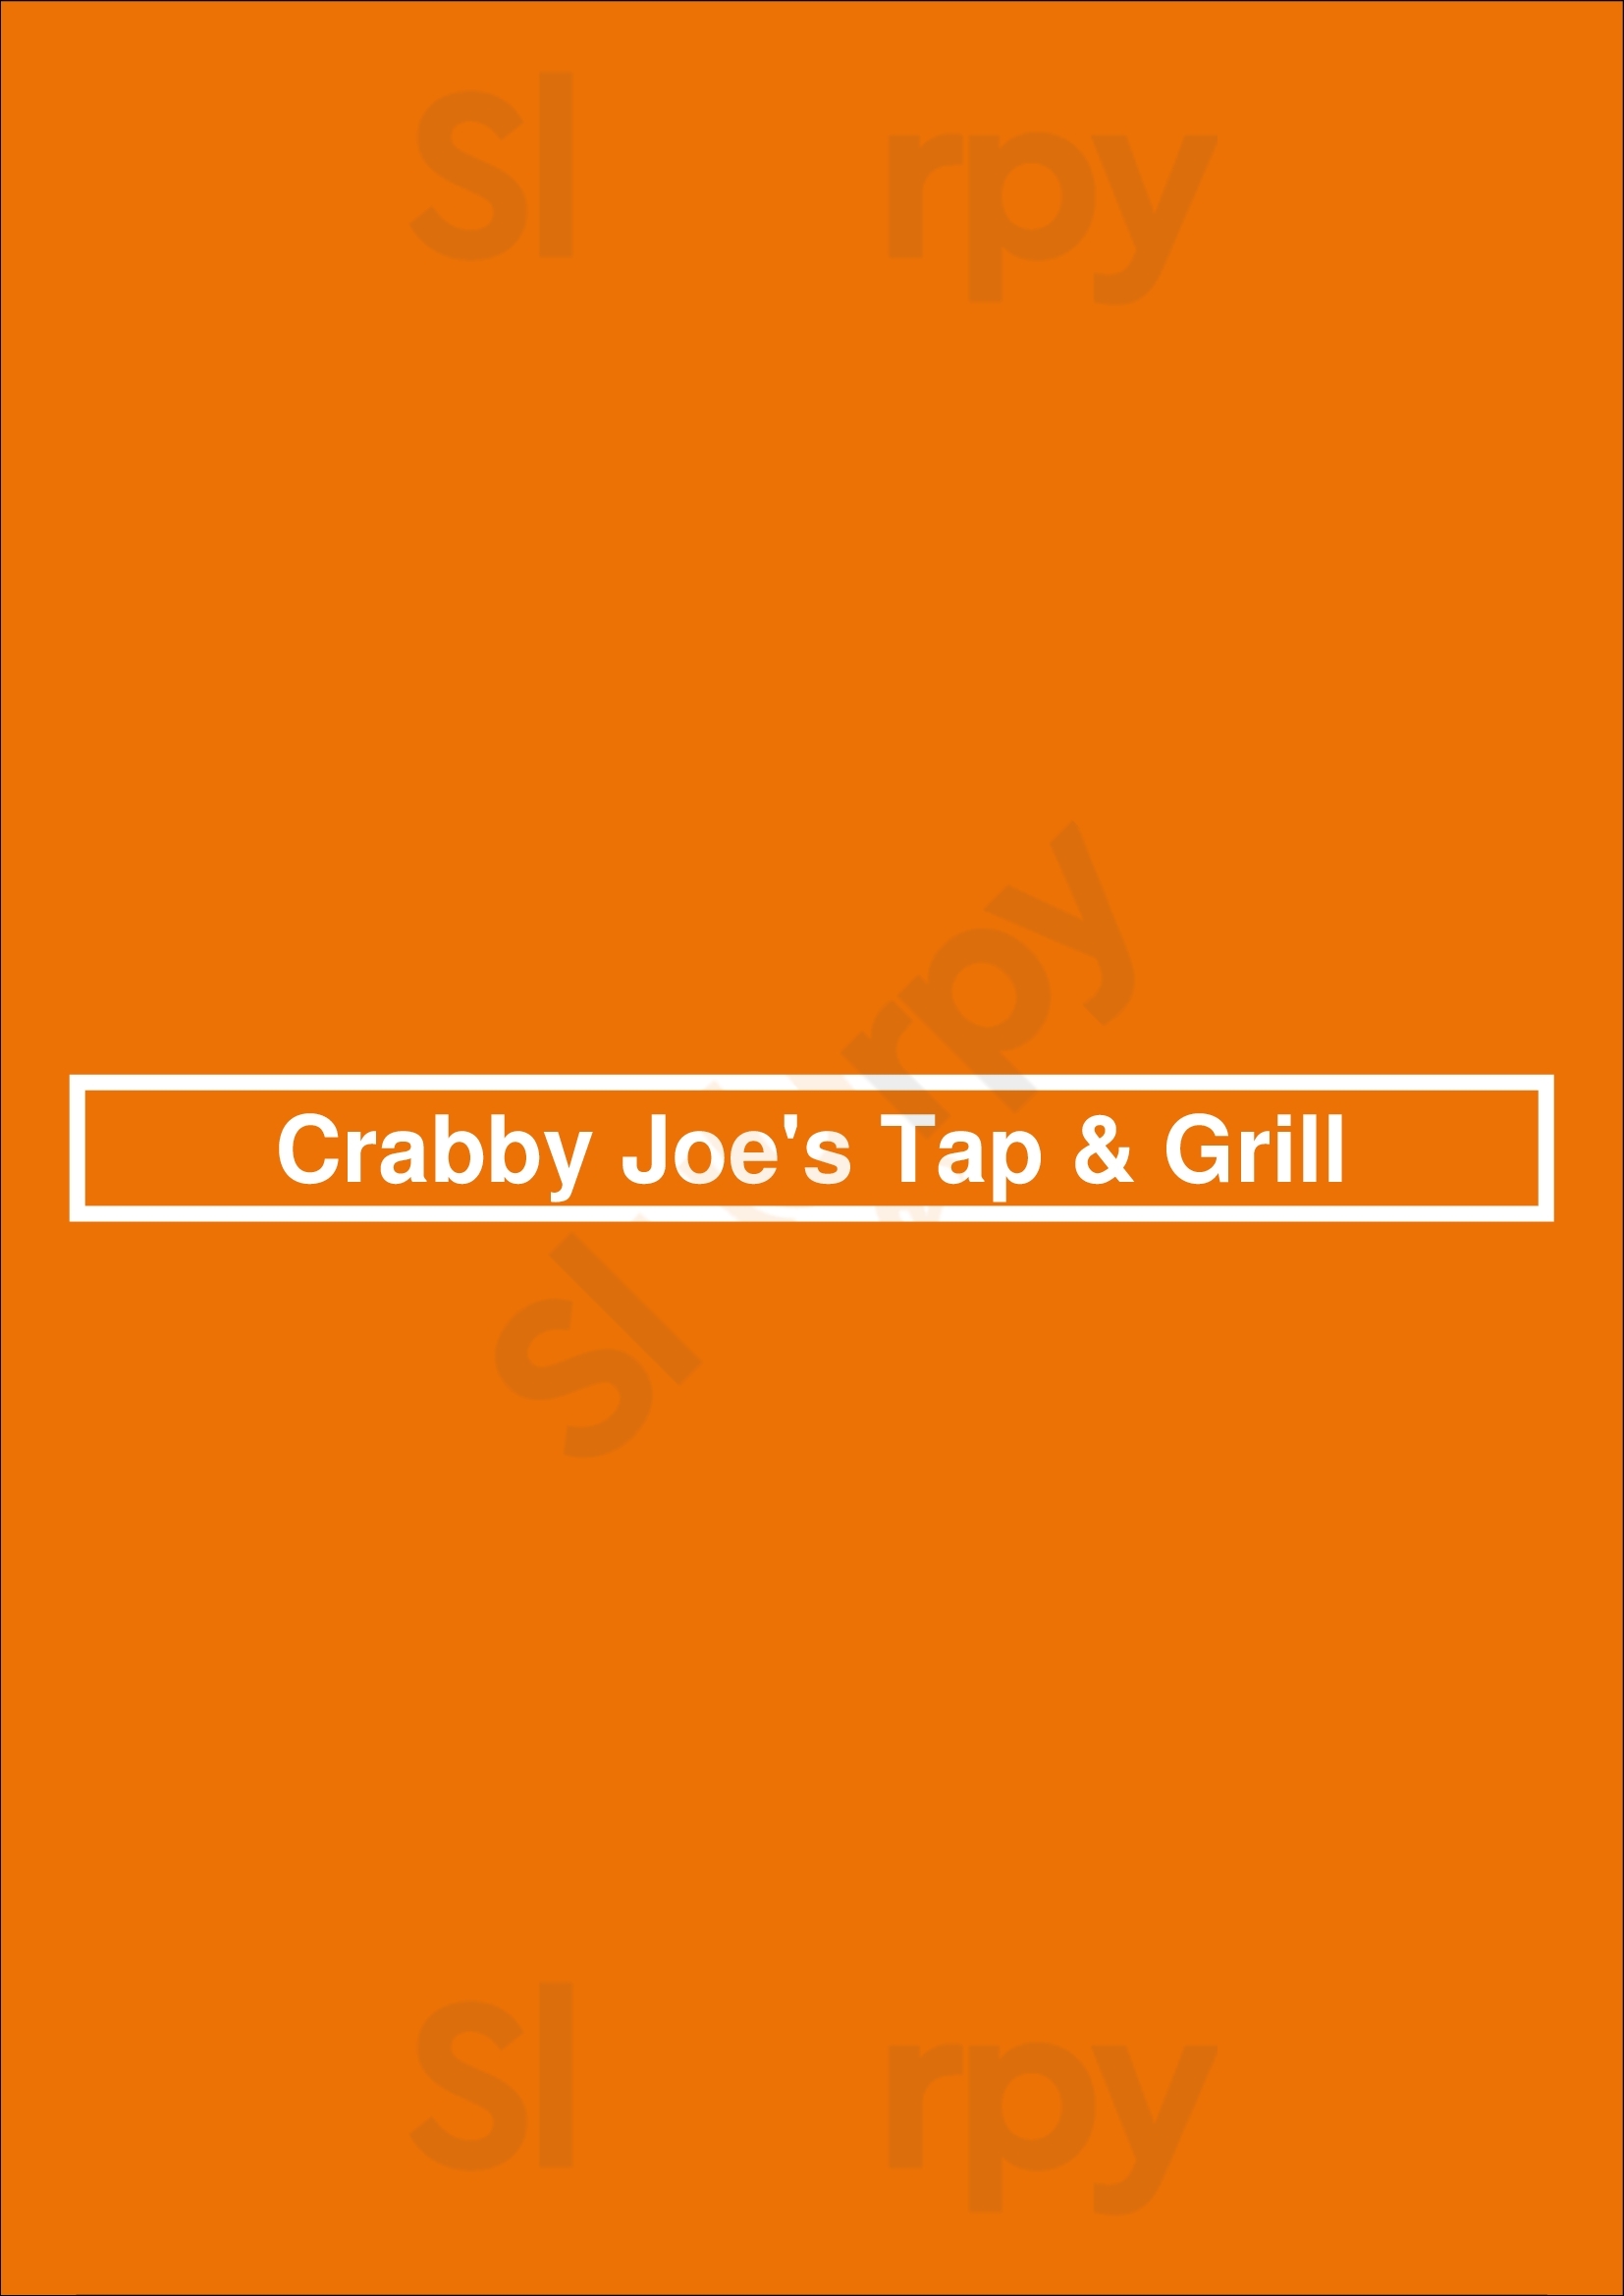 Crabby Joe's Tap & Grill Waterloo Menu - 1